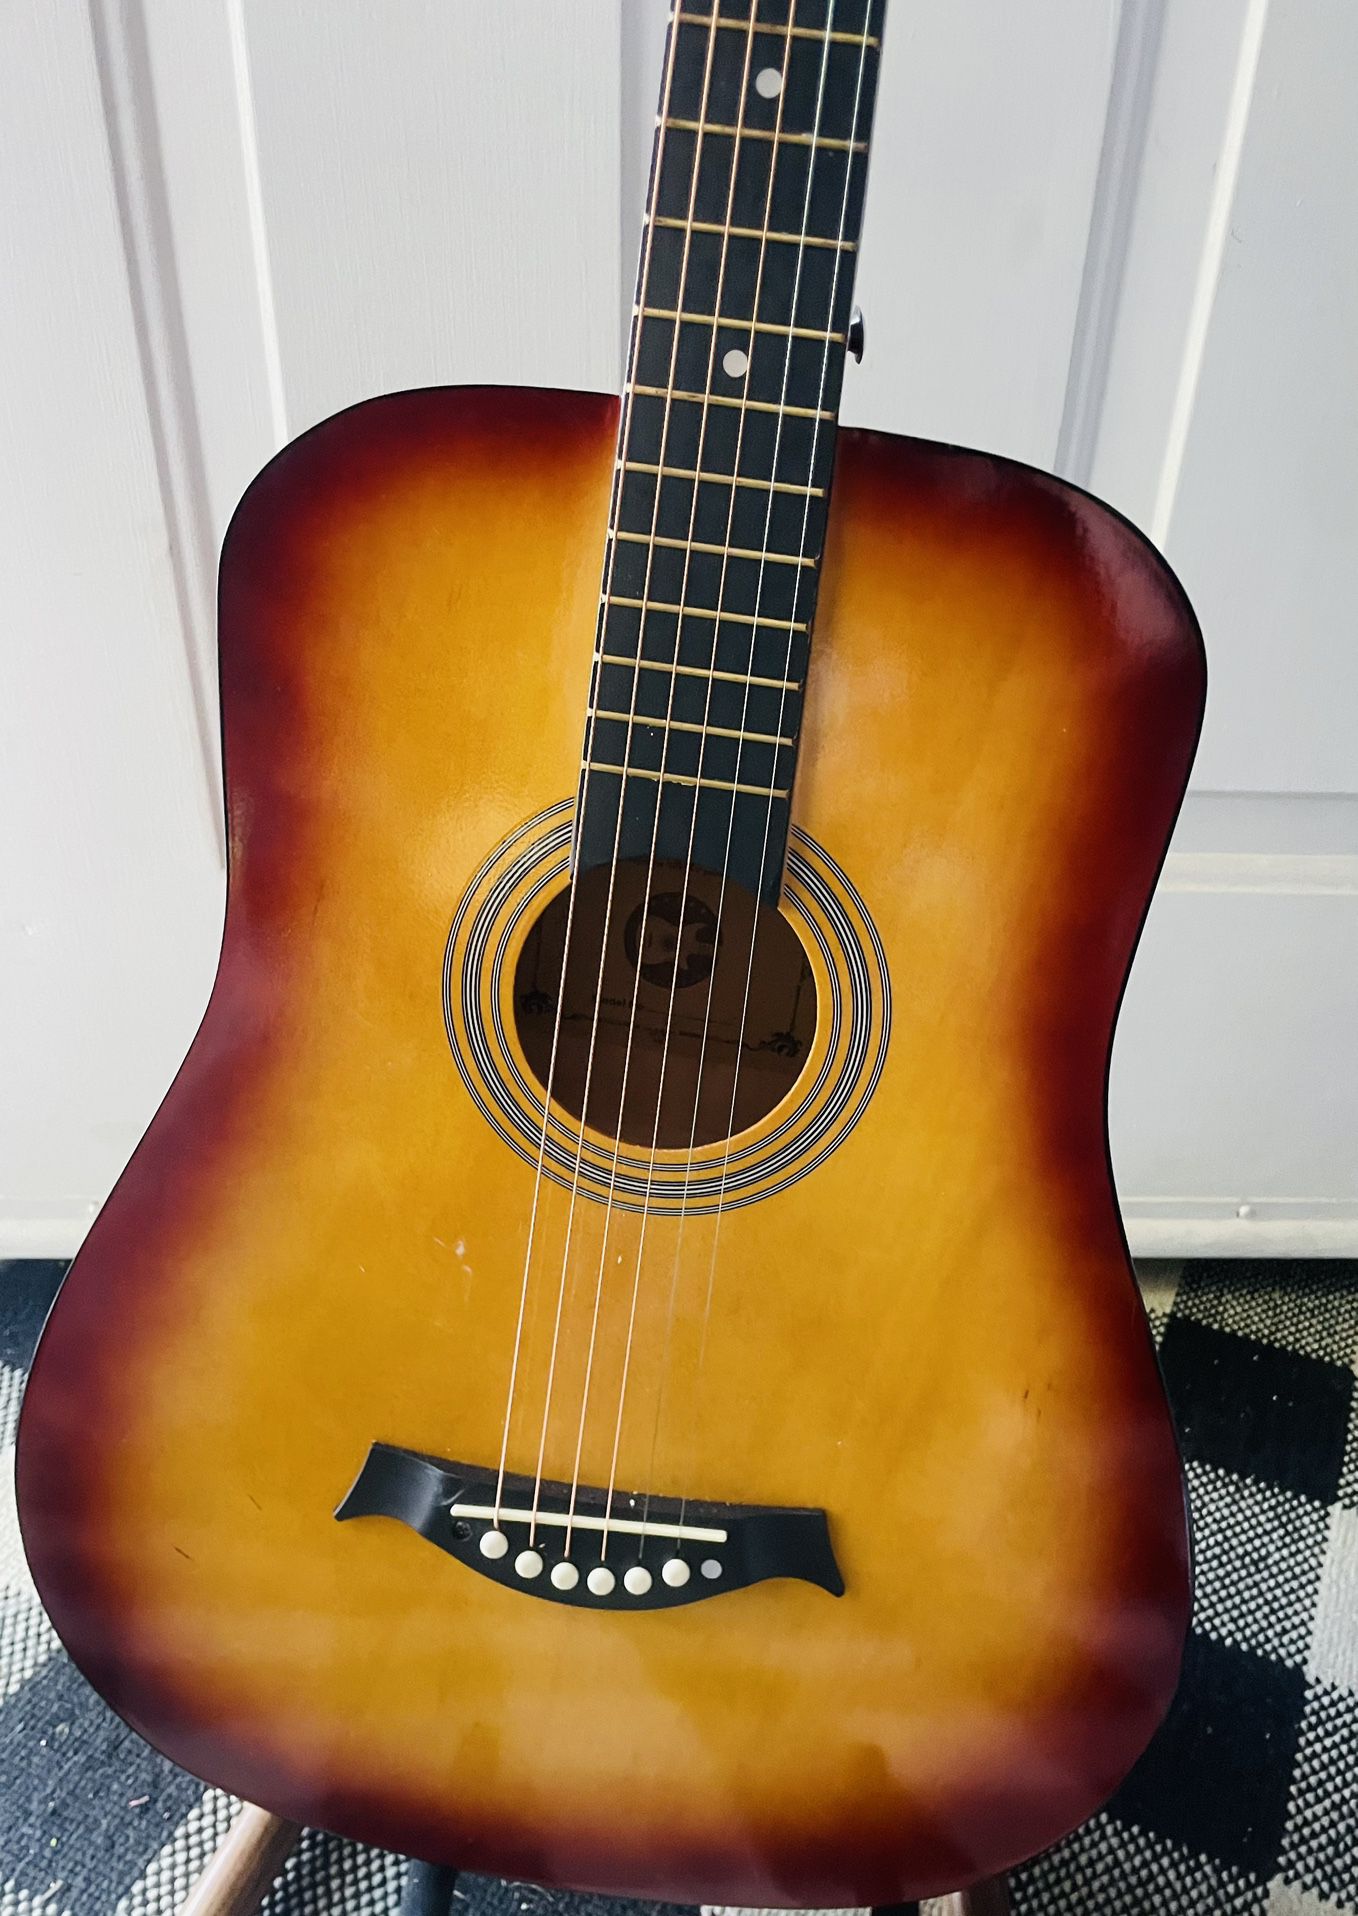 Beginners Acoustic Guitar (Pre-Owned)